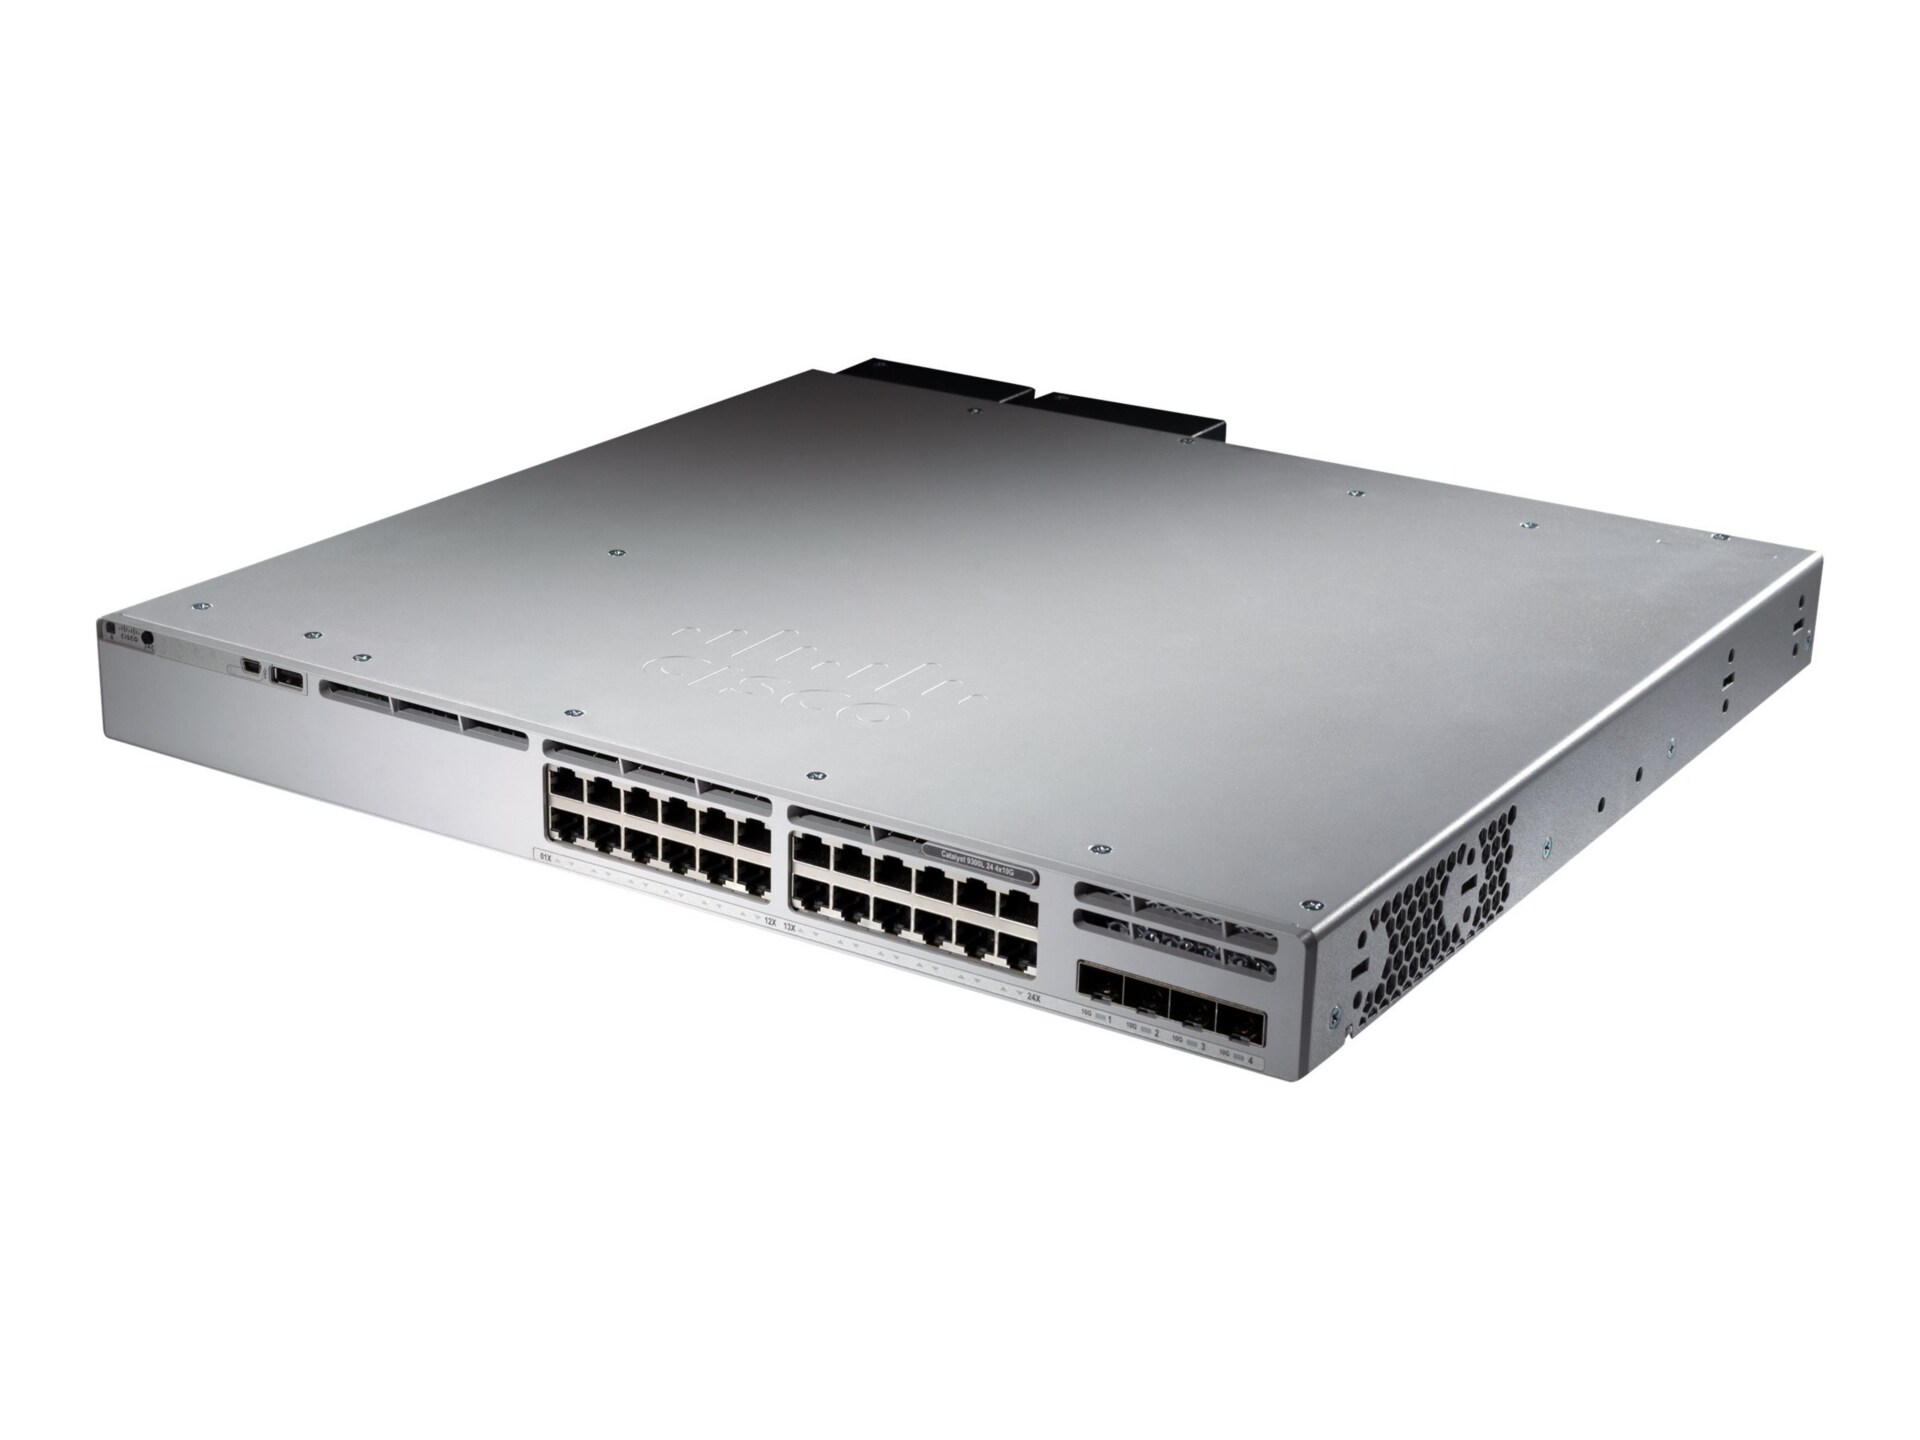 Cisco Catalyst 9300L - Network Advantage - switch - 24 ports - managed - rack-mountable